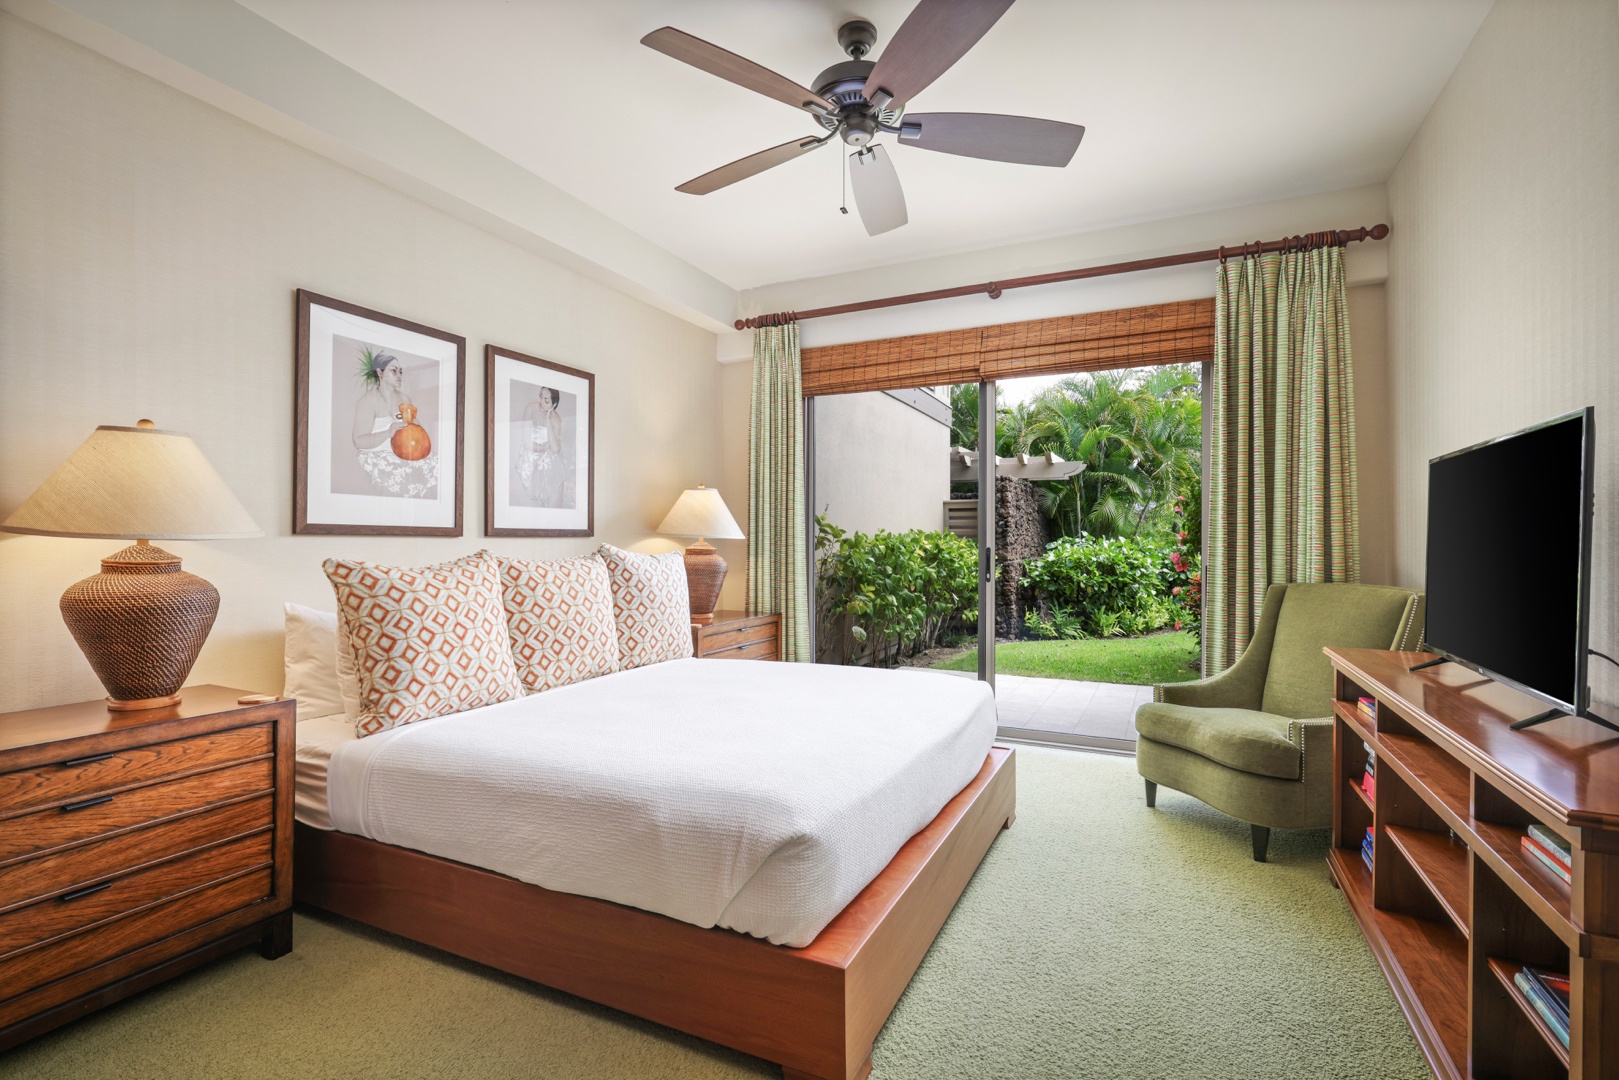 Kailua Kona Vacation Rentals, 3BD Ke Alaula Villa (210B) at Four Seasons Resort at Hualalai - Guest Room #2 (lower level) w/King bed, flat screen television, private patio & adjacent full bath.